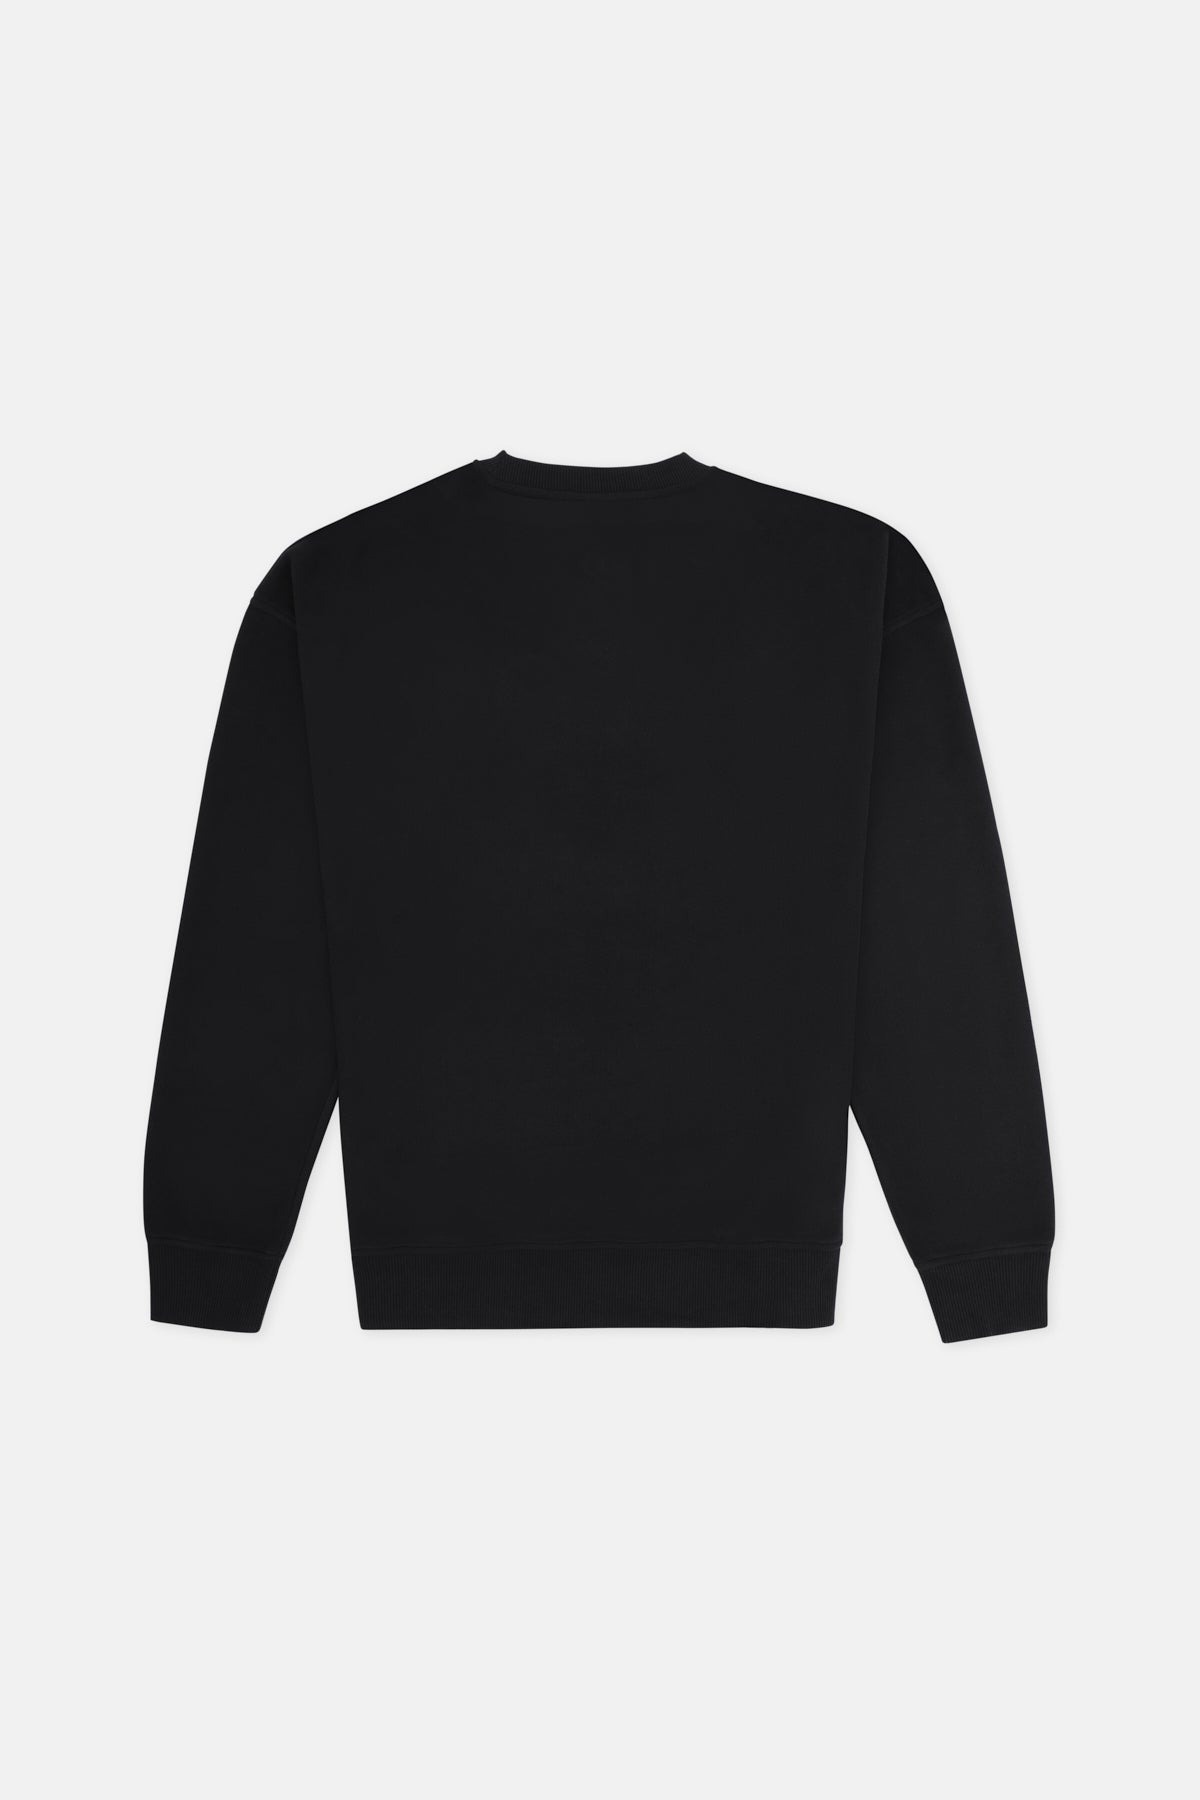 Palyaço Balığı Super Soft Oversize Sweatshirt - Siyah